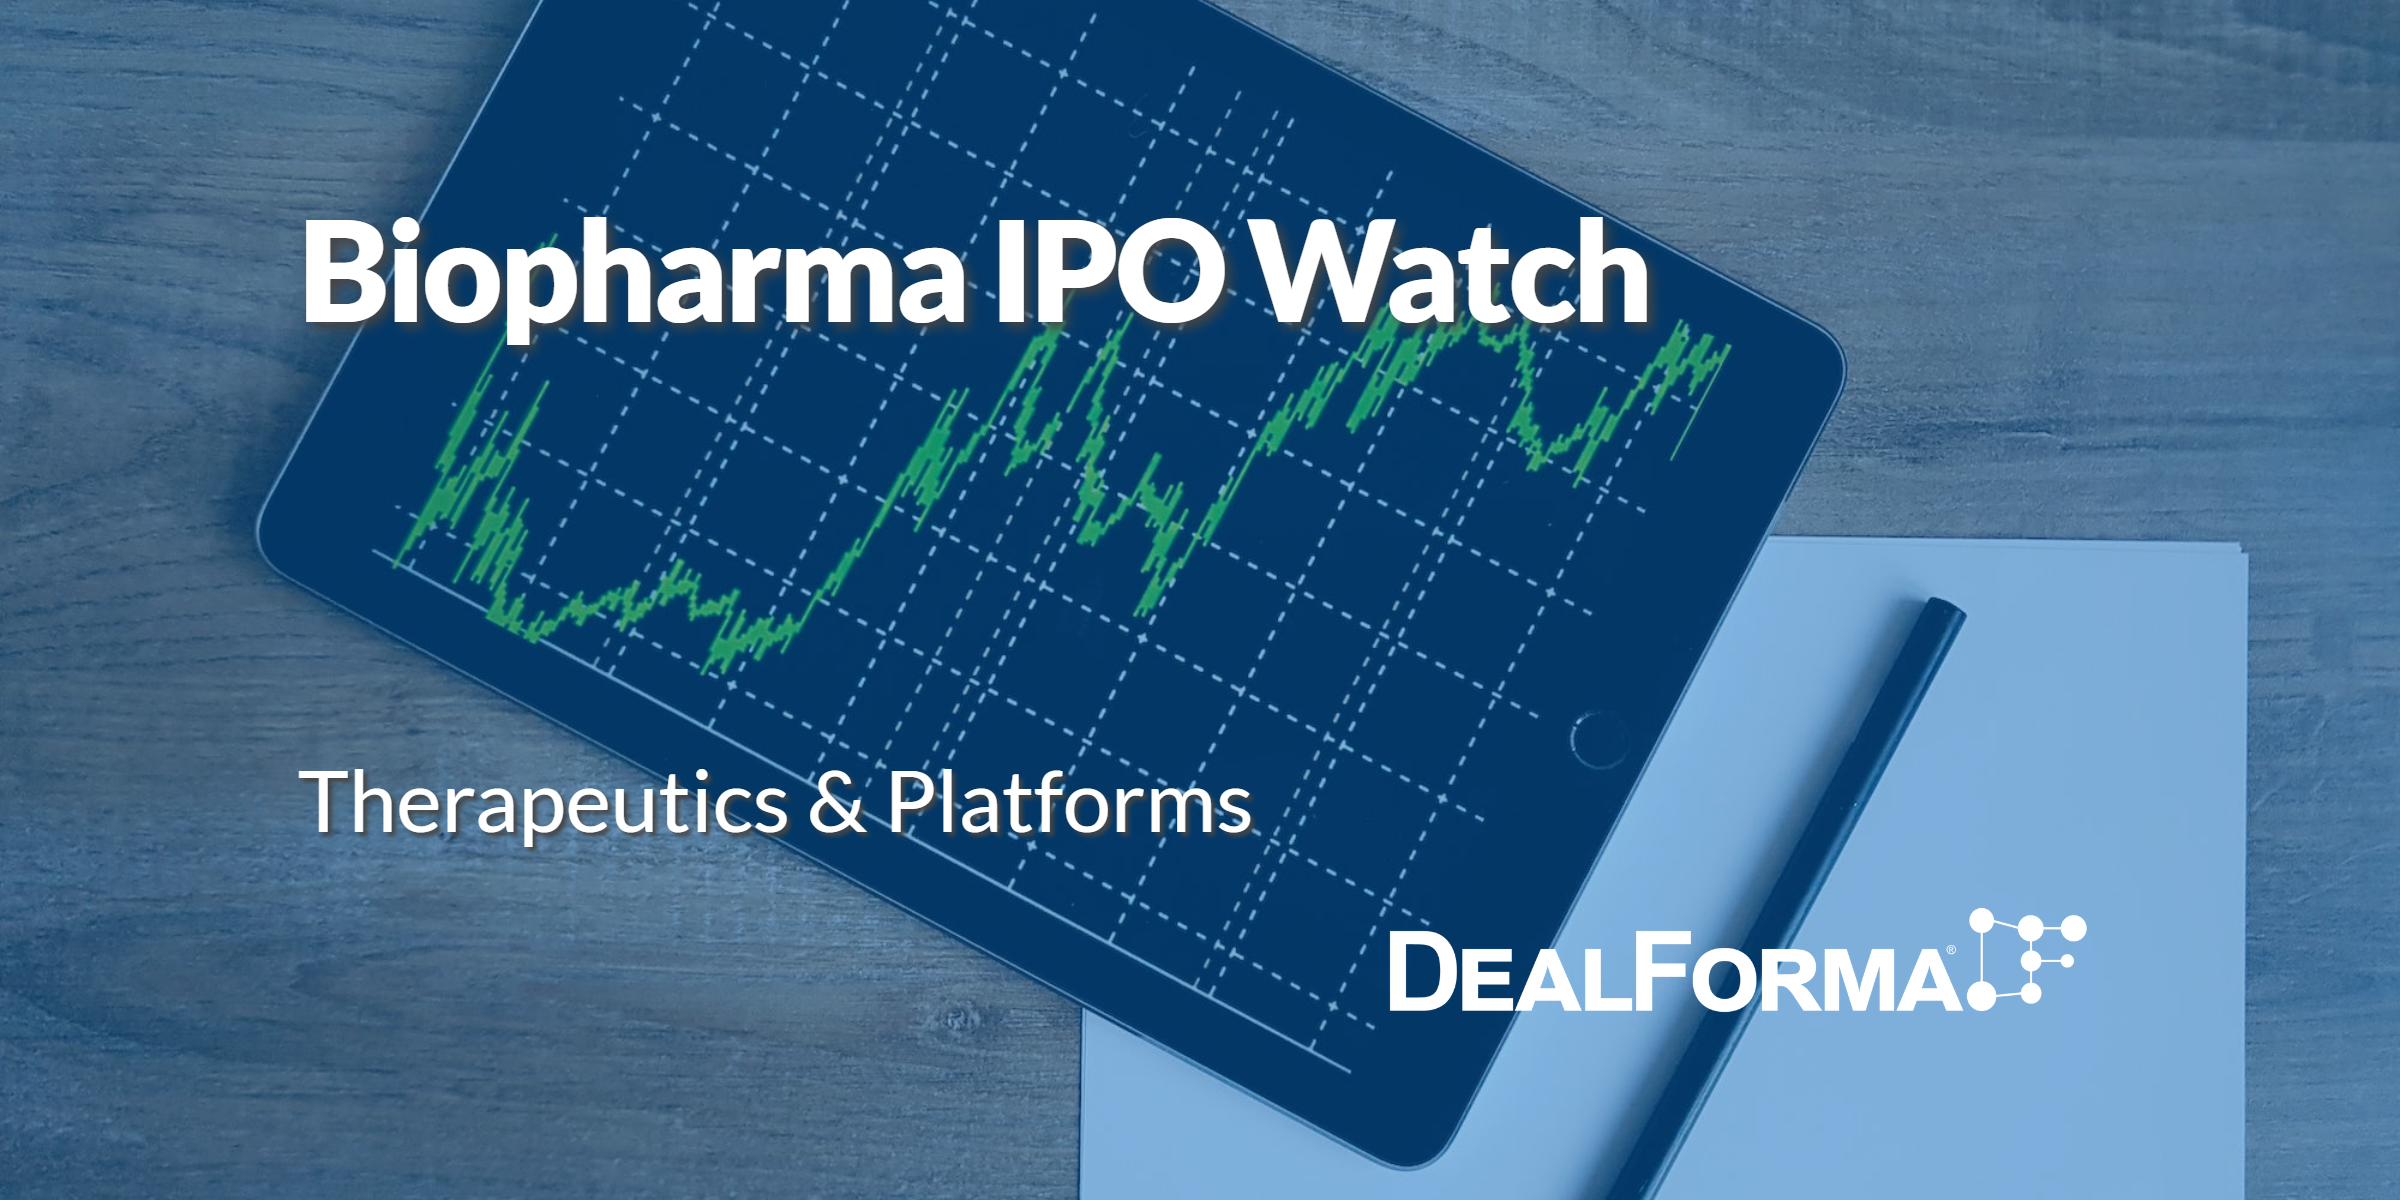 Dealforma - Biopharma IPO Watch: Therapeutics & Platforms